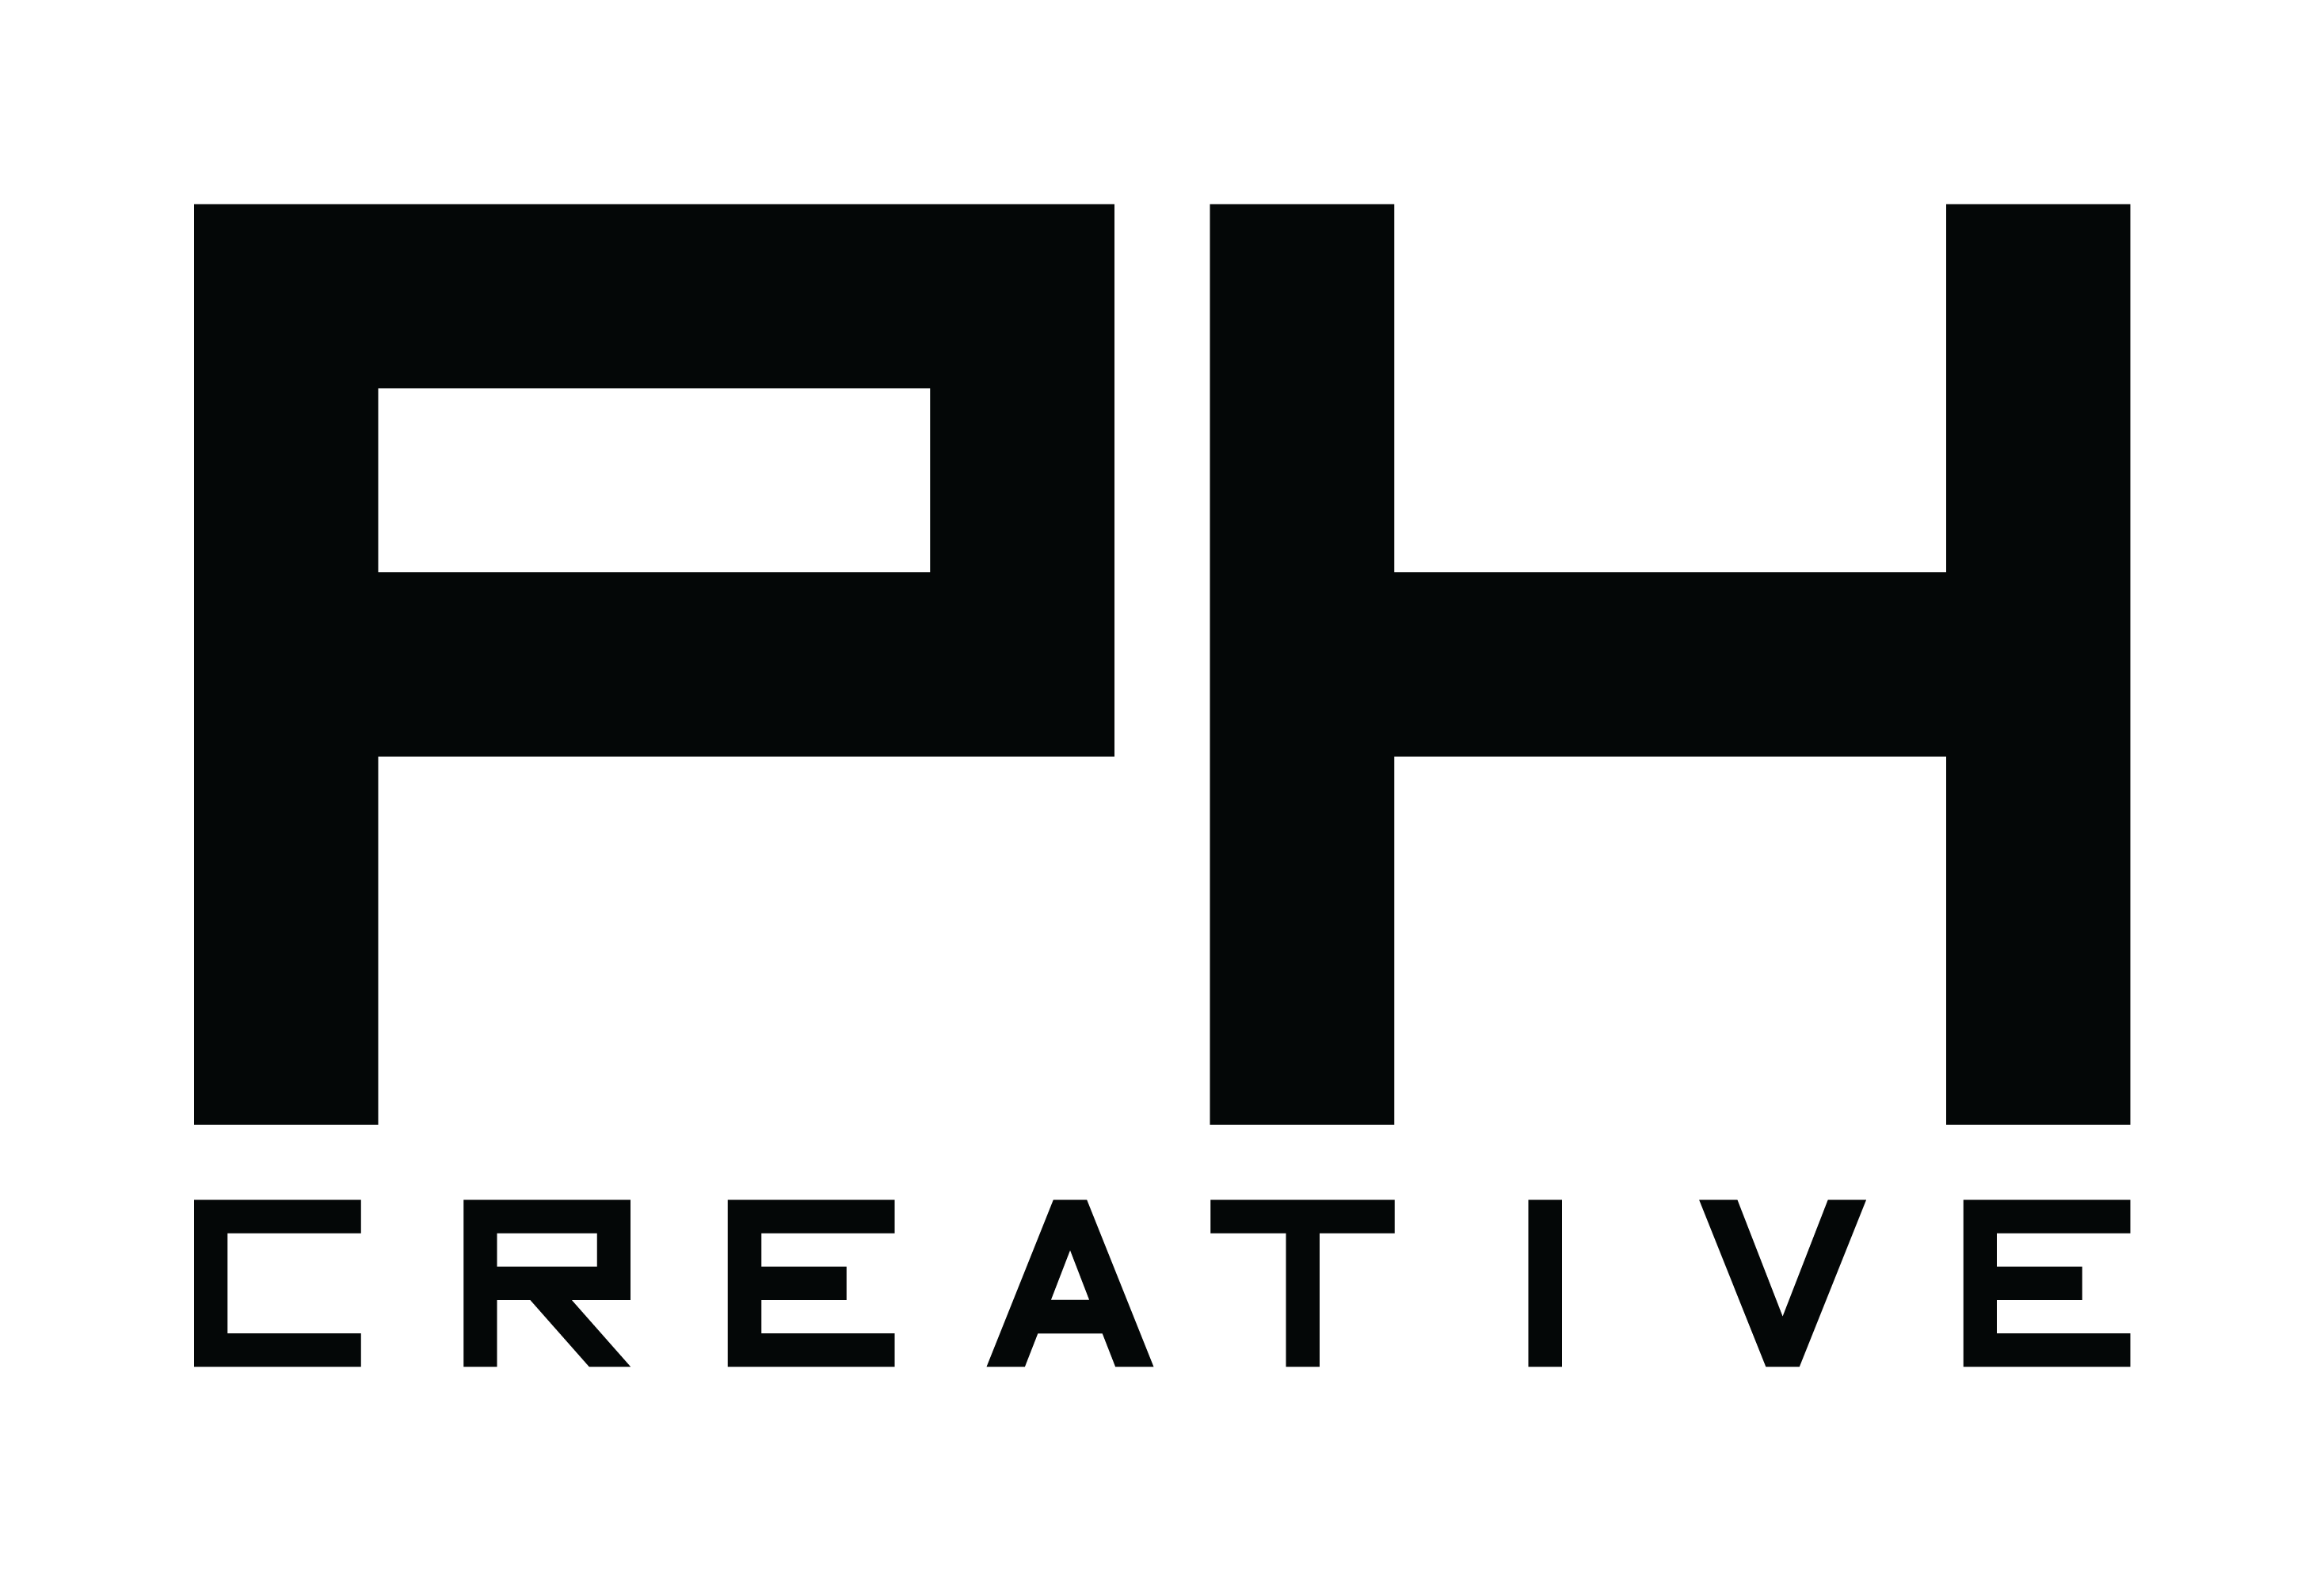 PH Creative stacked black logo